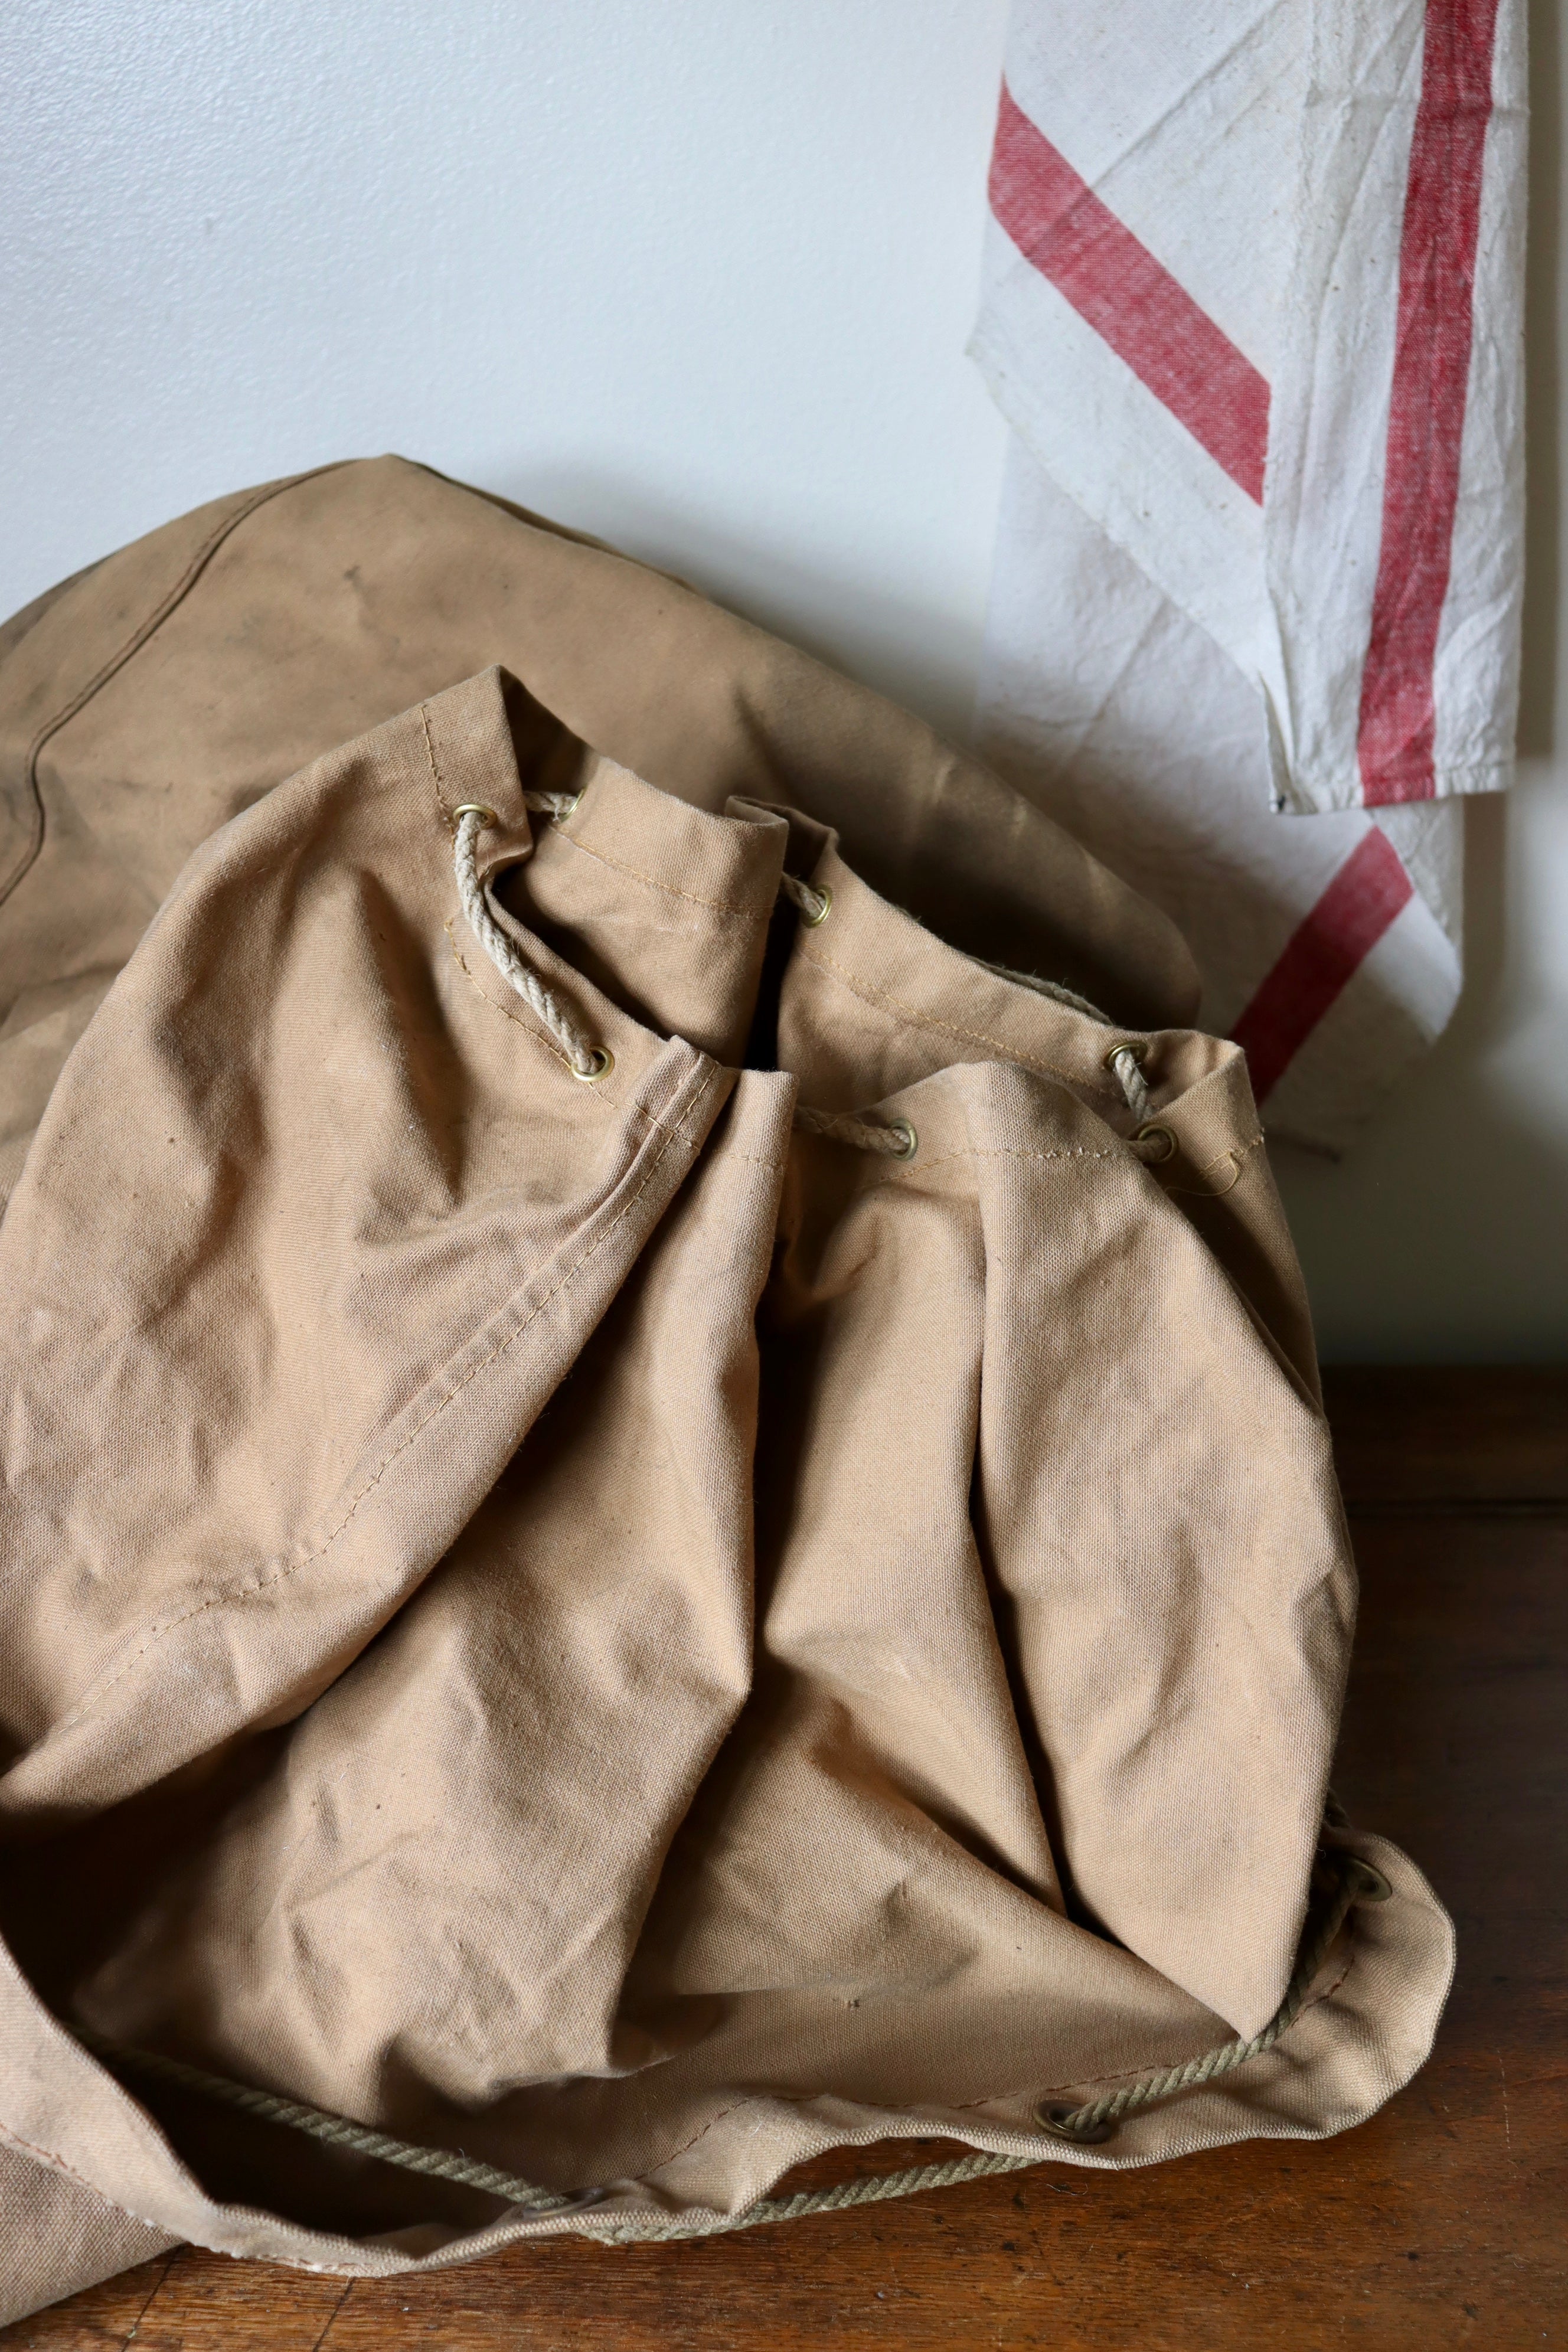 WW2 J. Mcfarlane Military Kit Bag